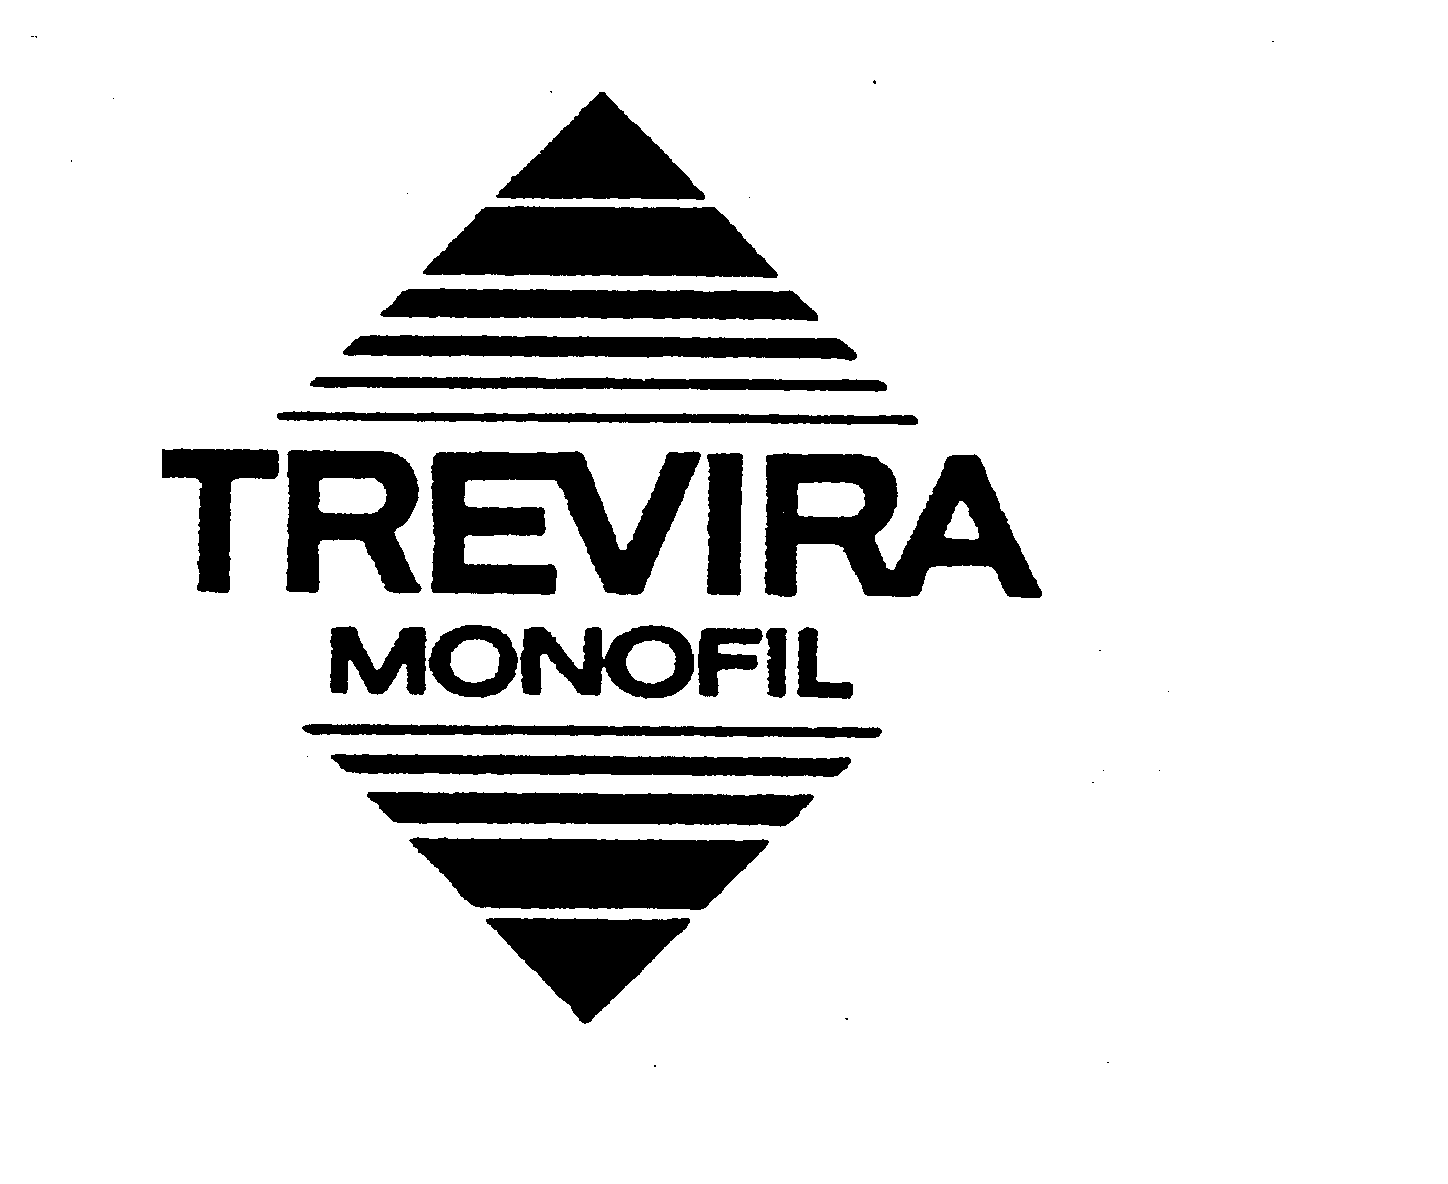  TREVIRA MONOFIL